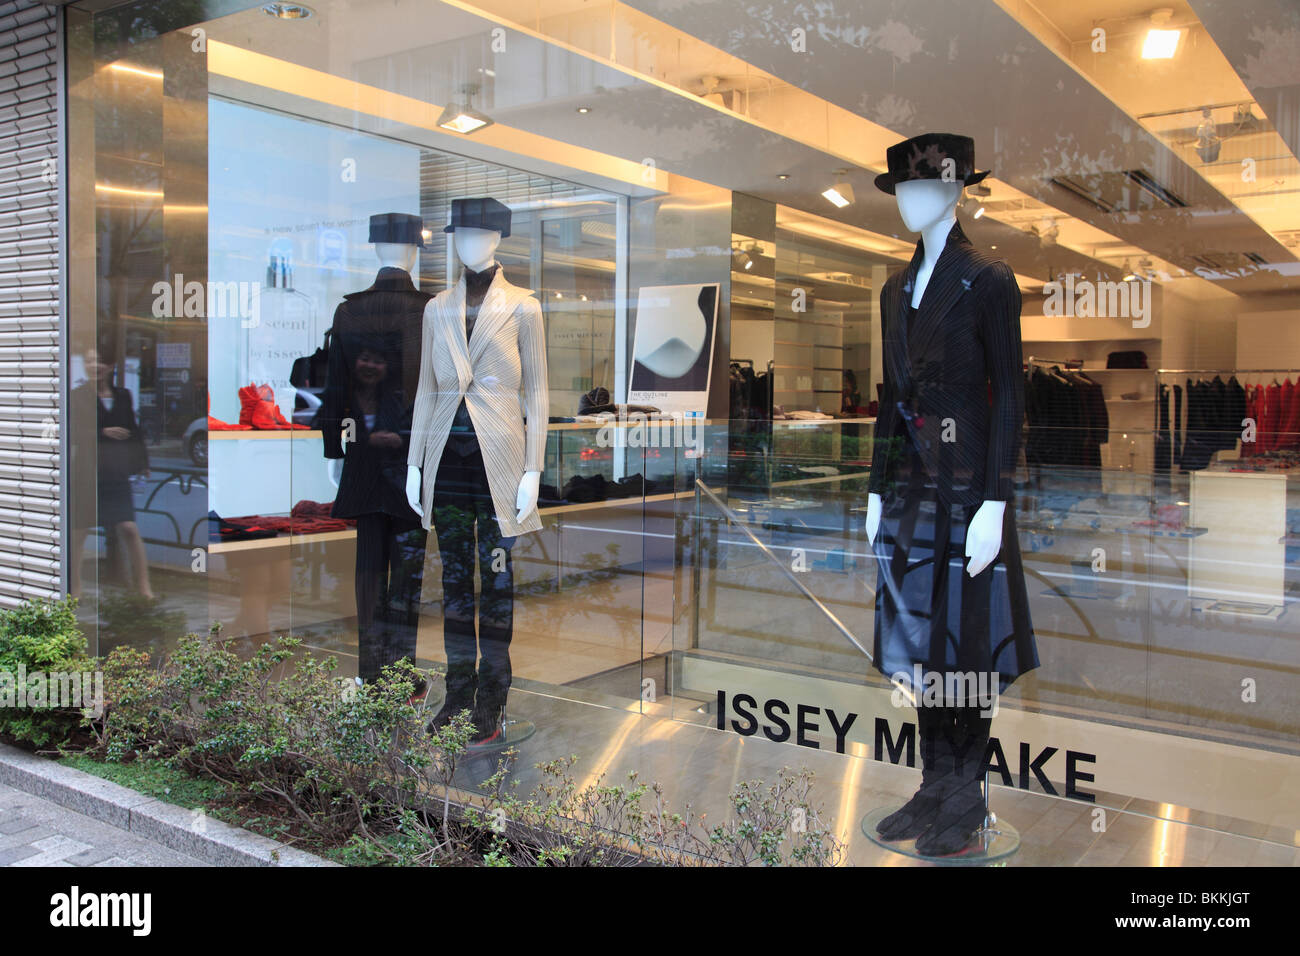 Issey Miyake showroom, Aoyama, upscale fashion shopping district, Tokyo, Japan, Asia Stock Photo